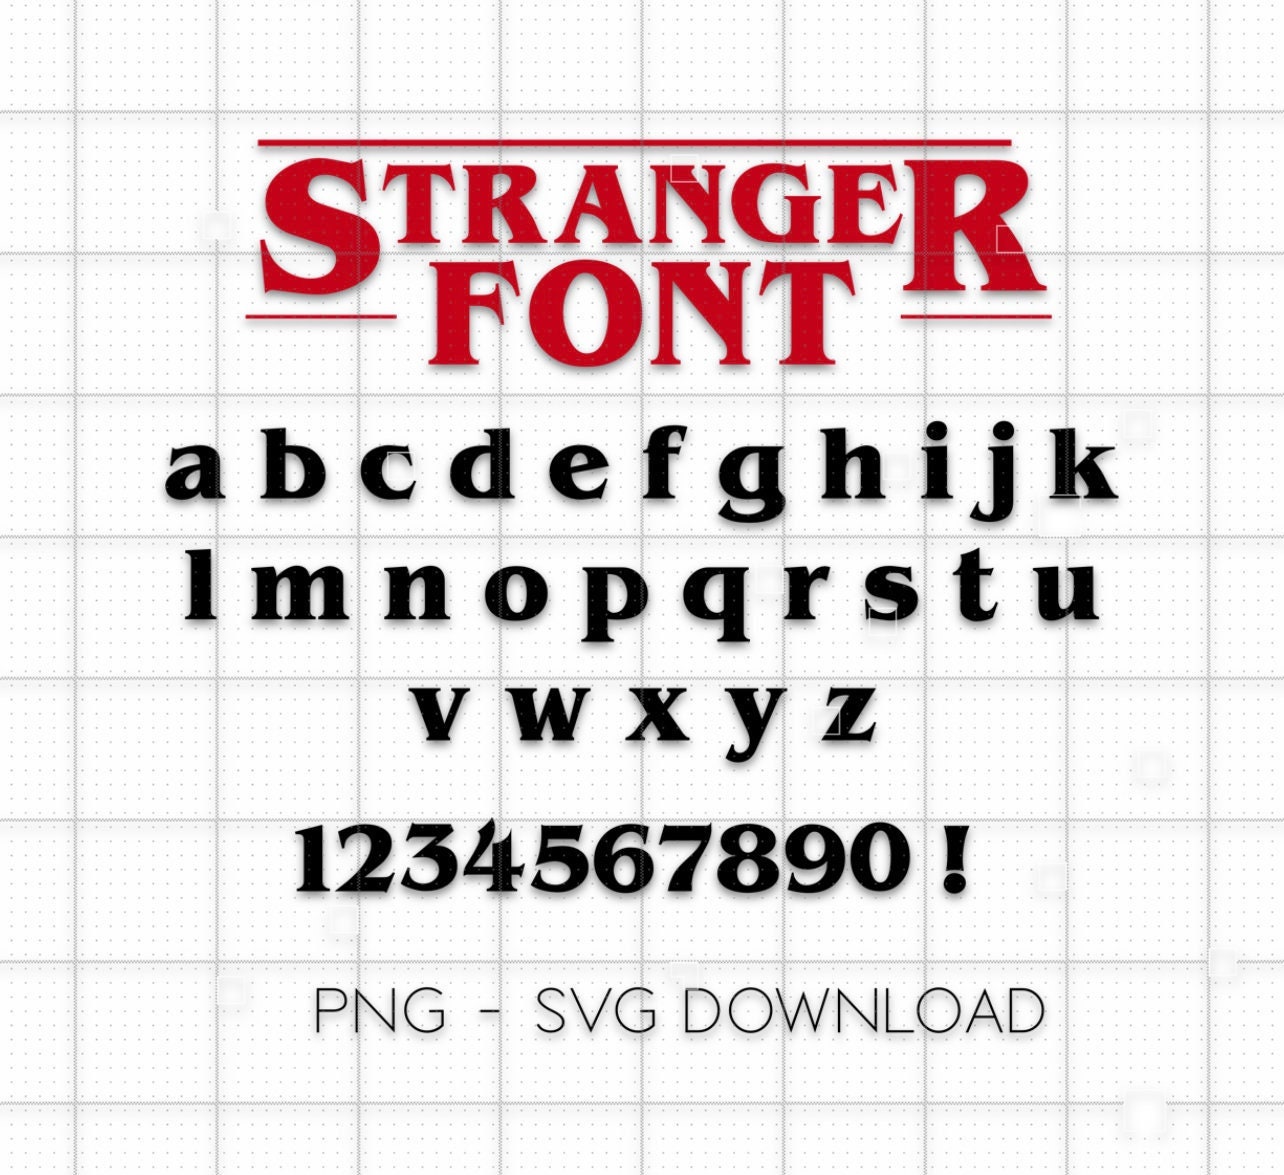 Stranger Things Font Download